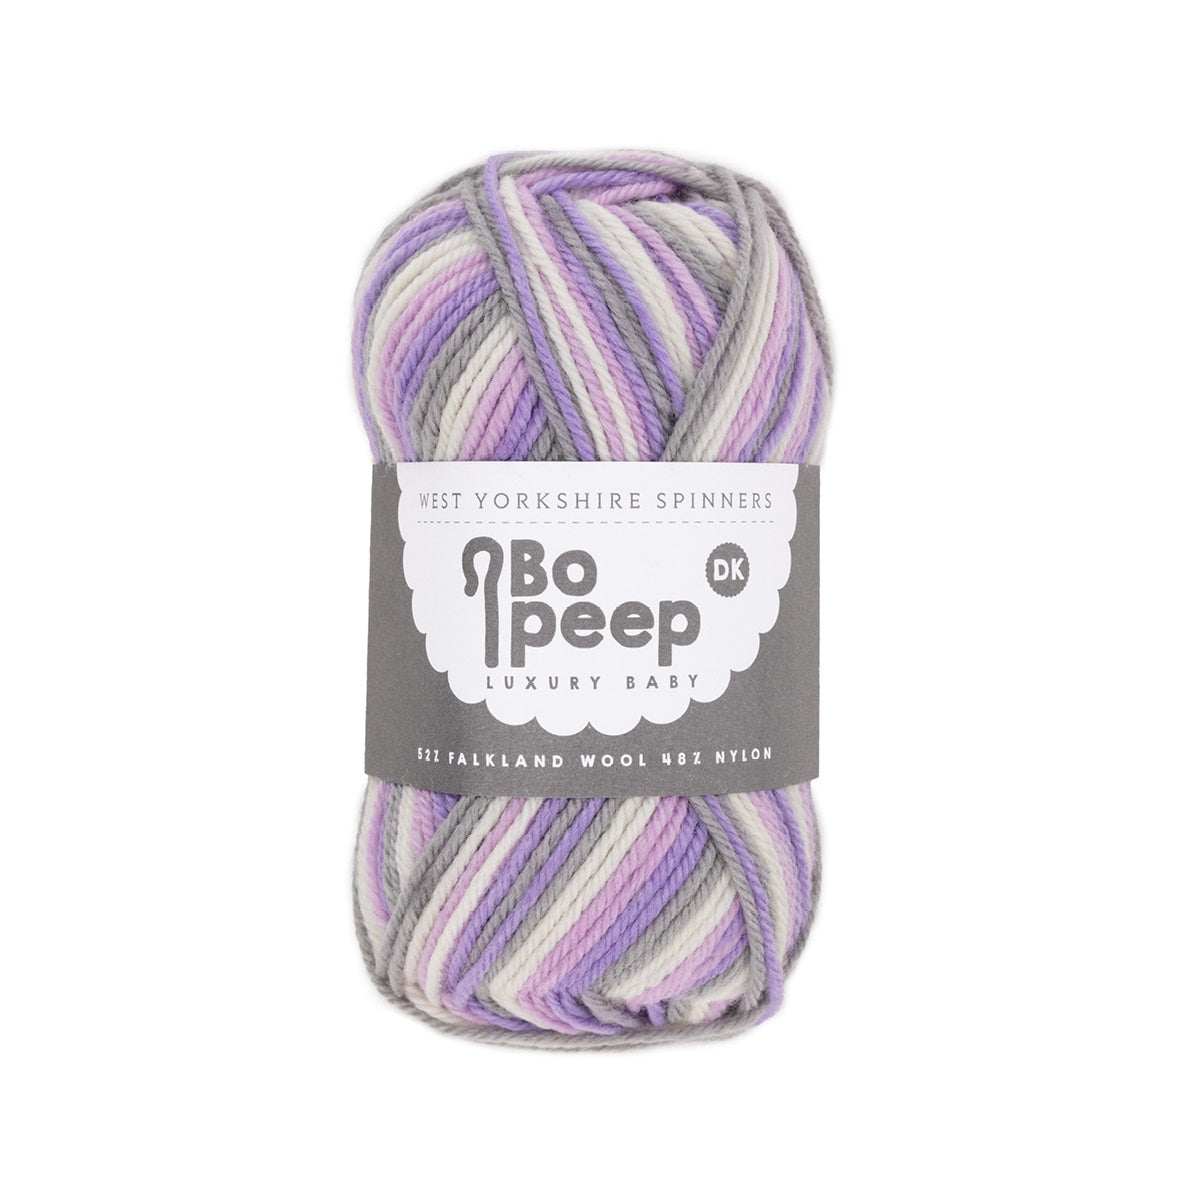 WYS West Yorkshire Spinners Bo Peep Luxury Baby DK yarn ball